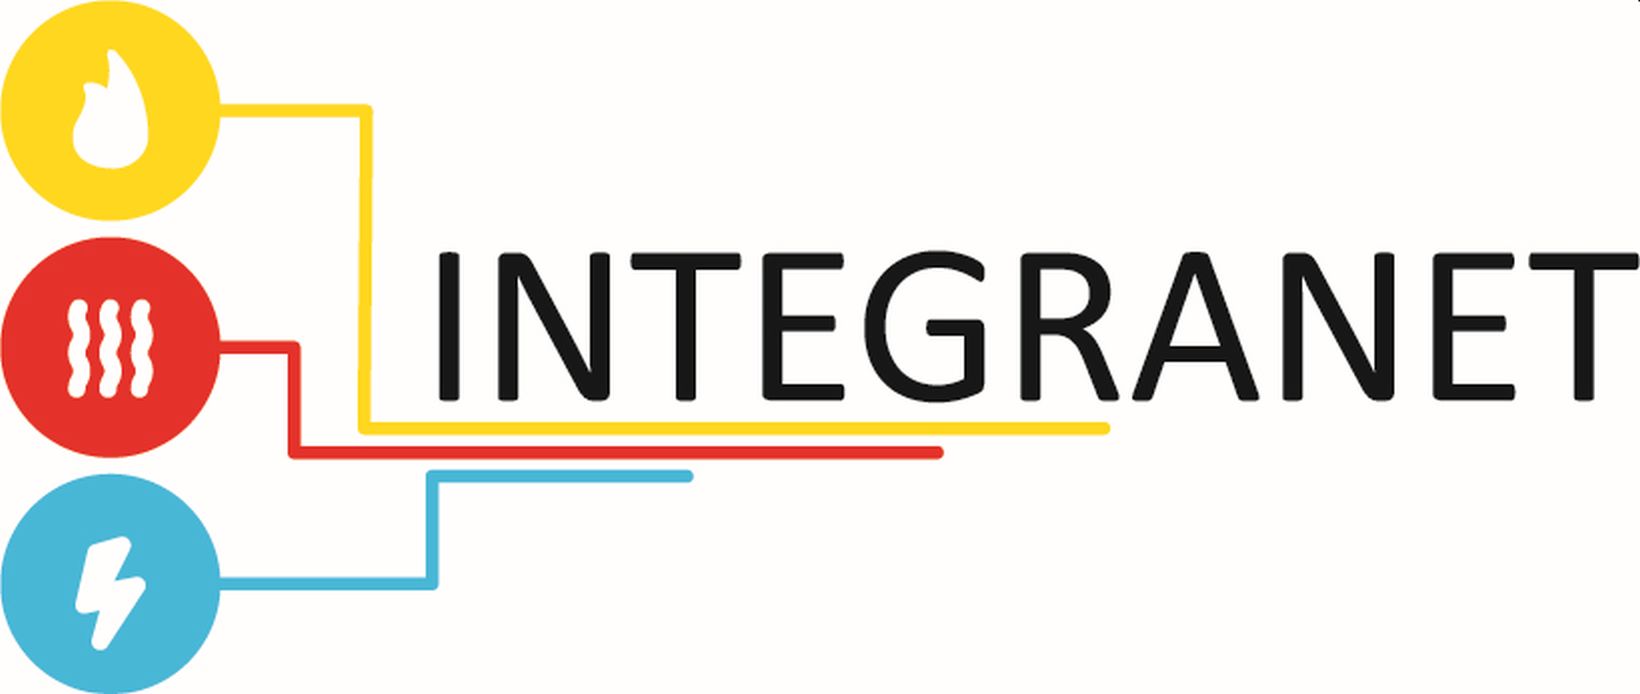 IntegraNet